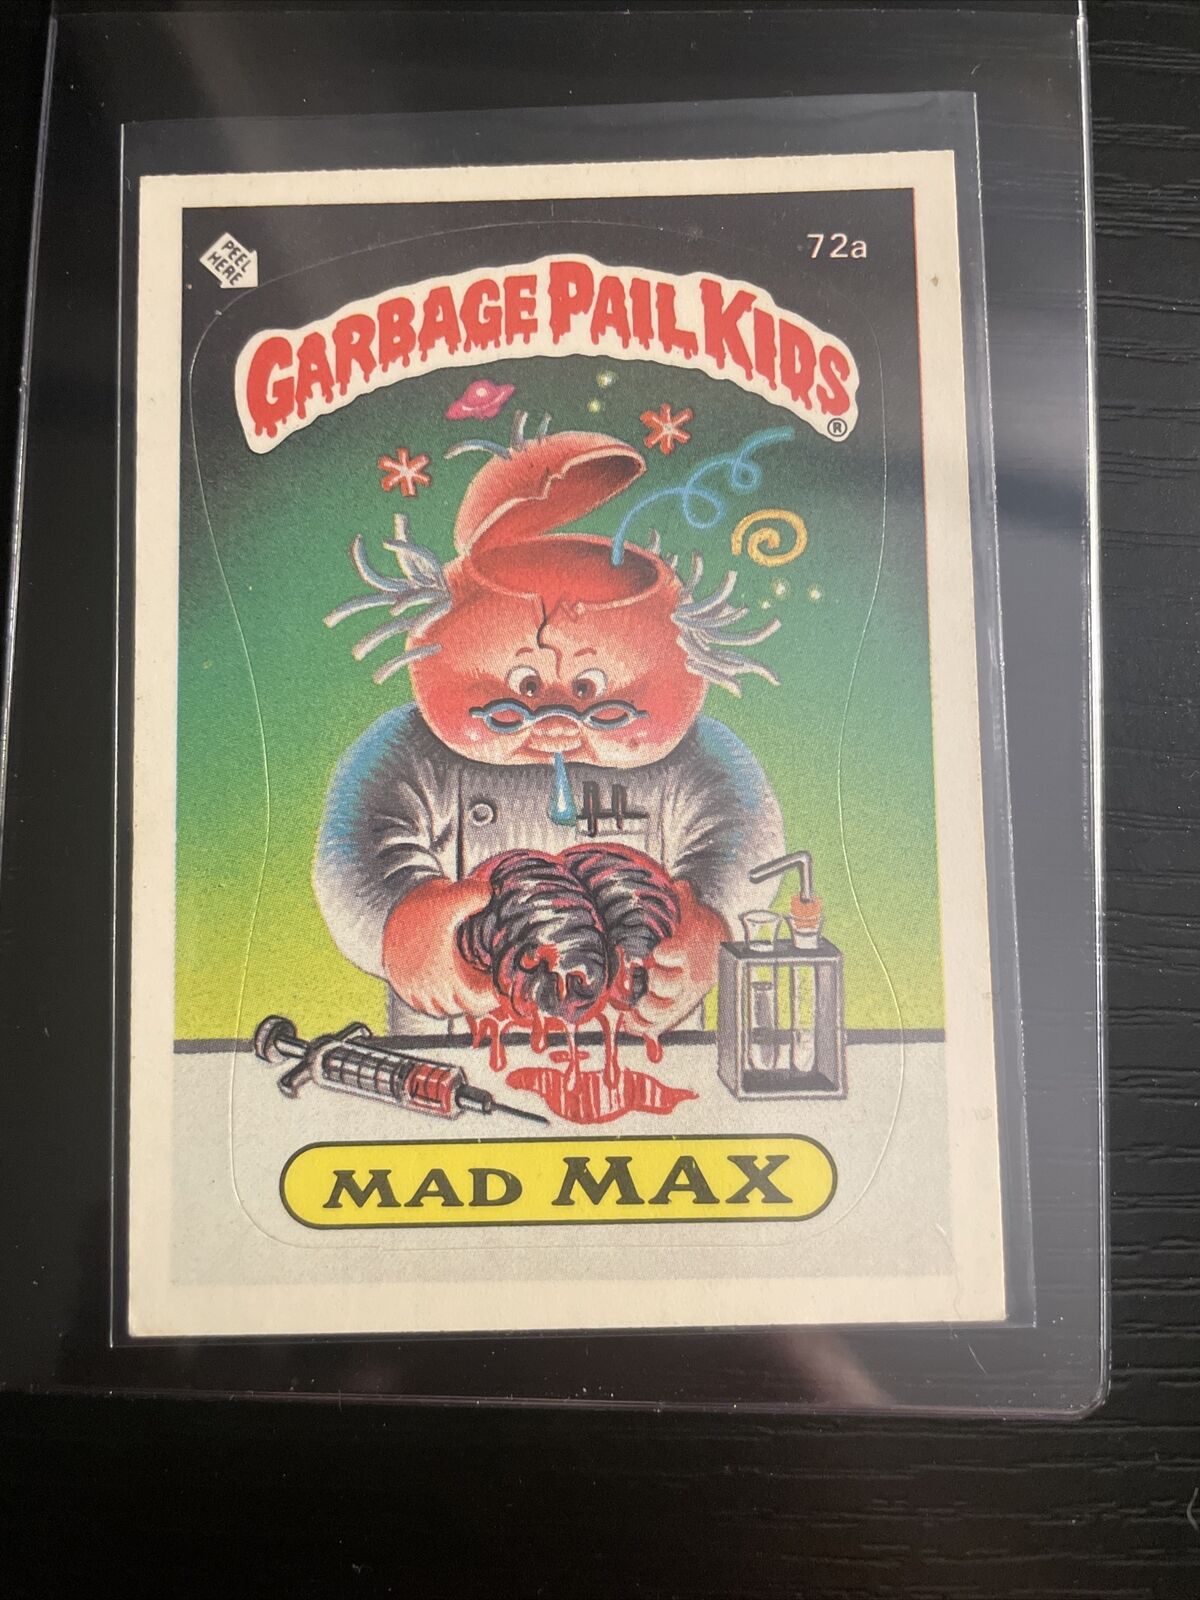 1985 Topps Garbage Pail Kids Card Series 2 OS2 GPK MATTE 72a Mad Max